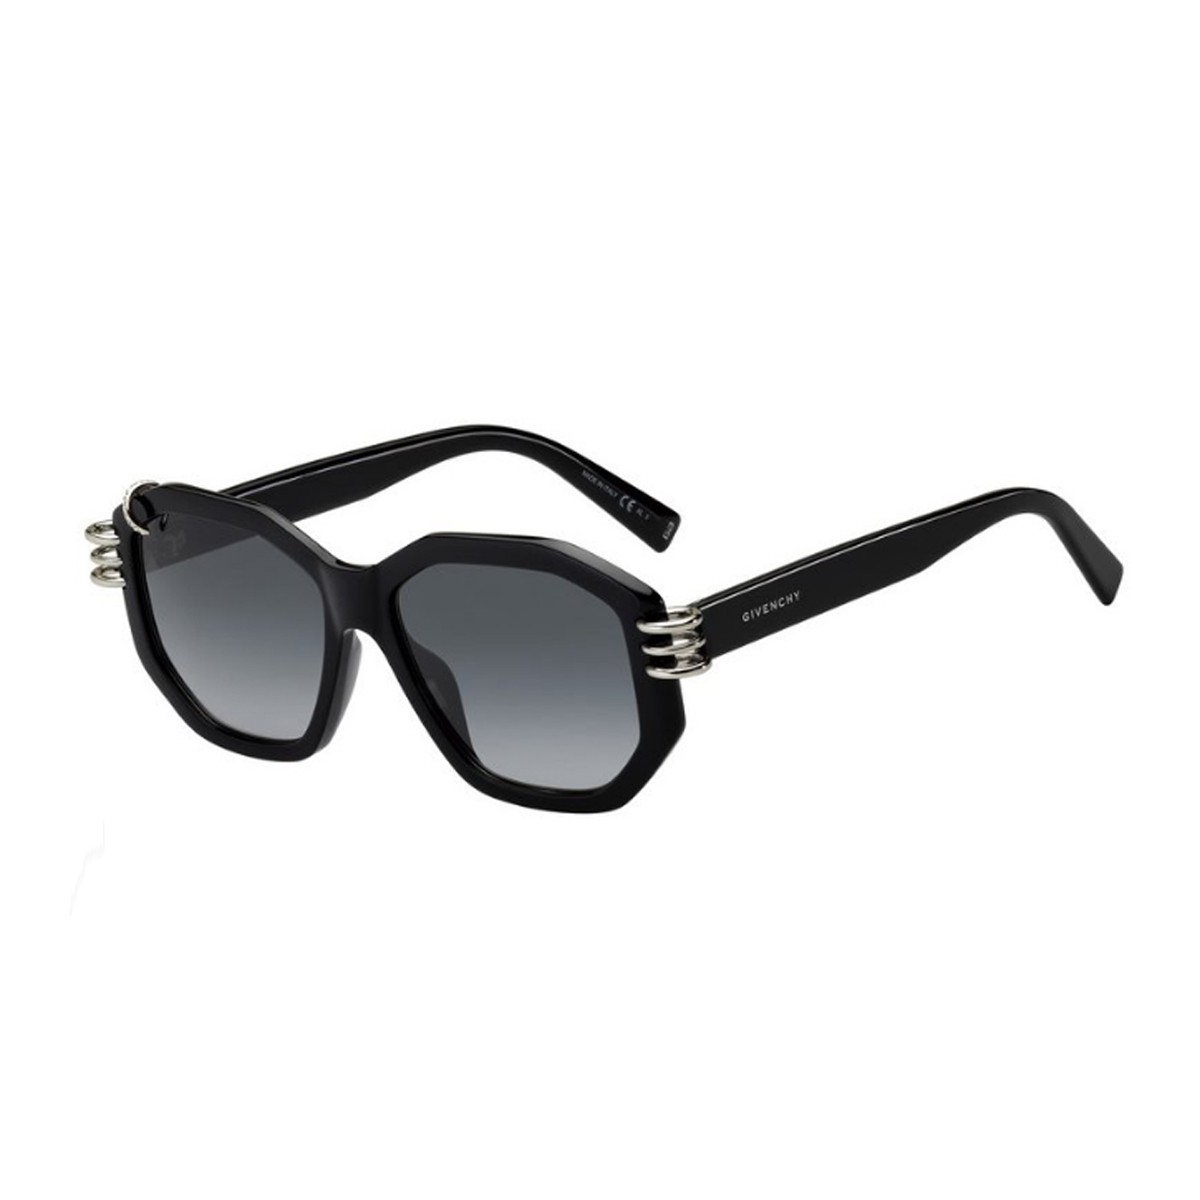 Givenchy Gv 7175/g/s | Women's sunglasses